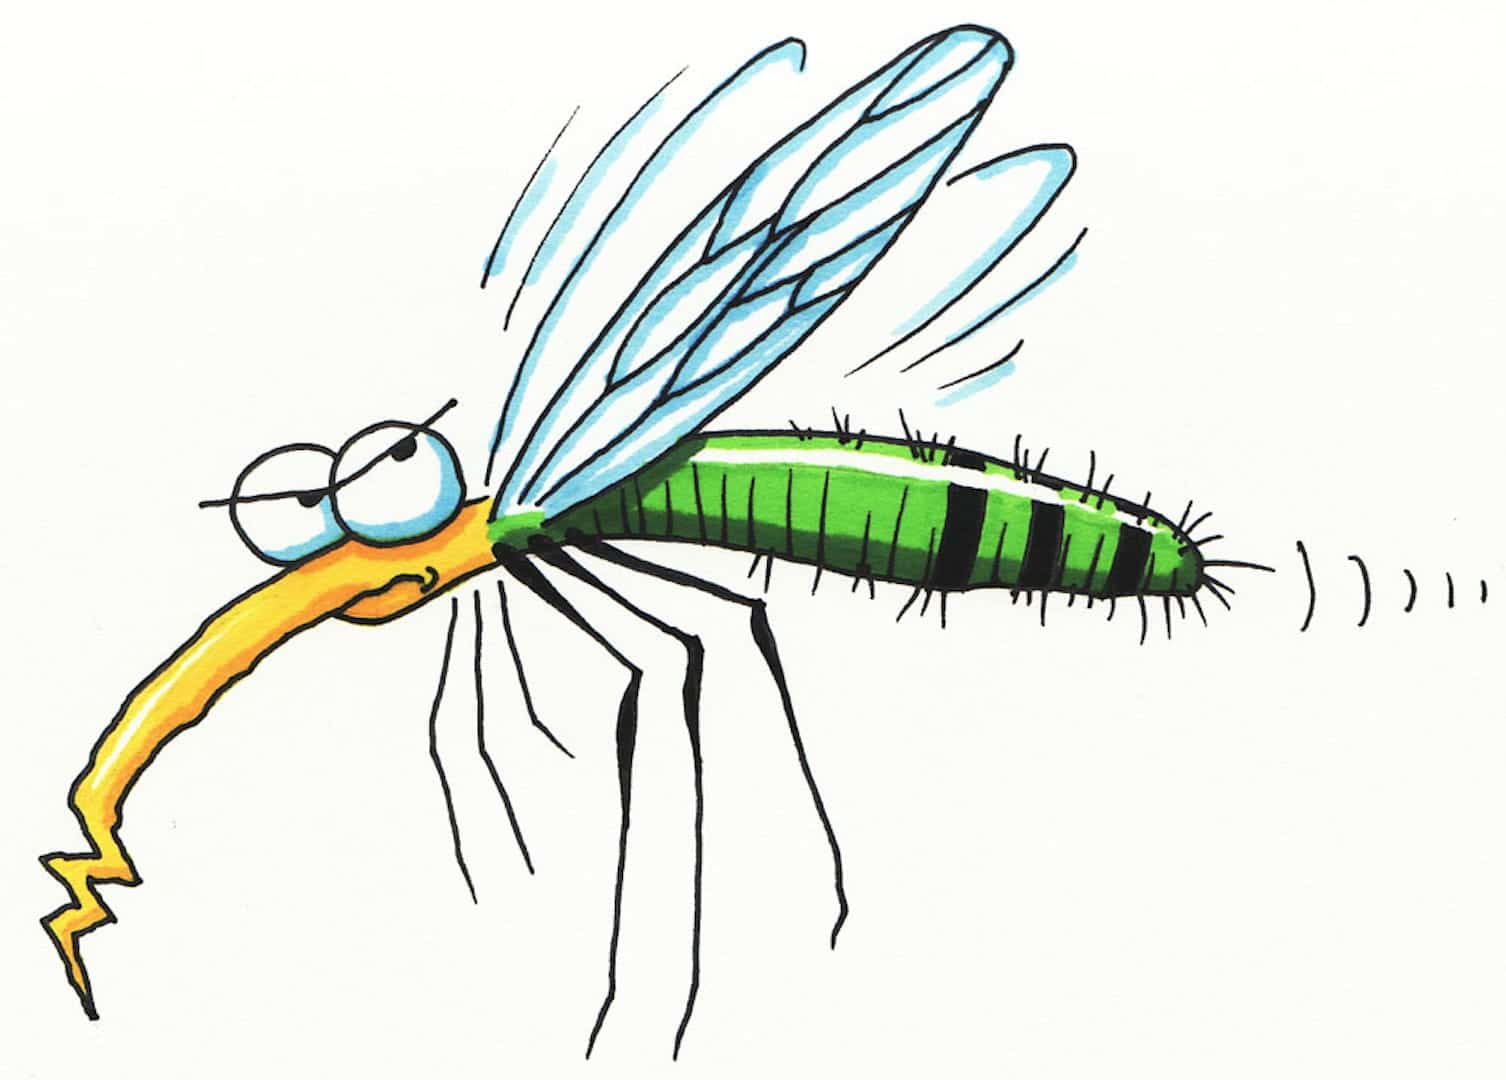 Online Video Helps Prepare Pesticide Applicators to Pass the Mosquito Control Exam